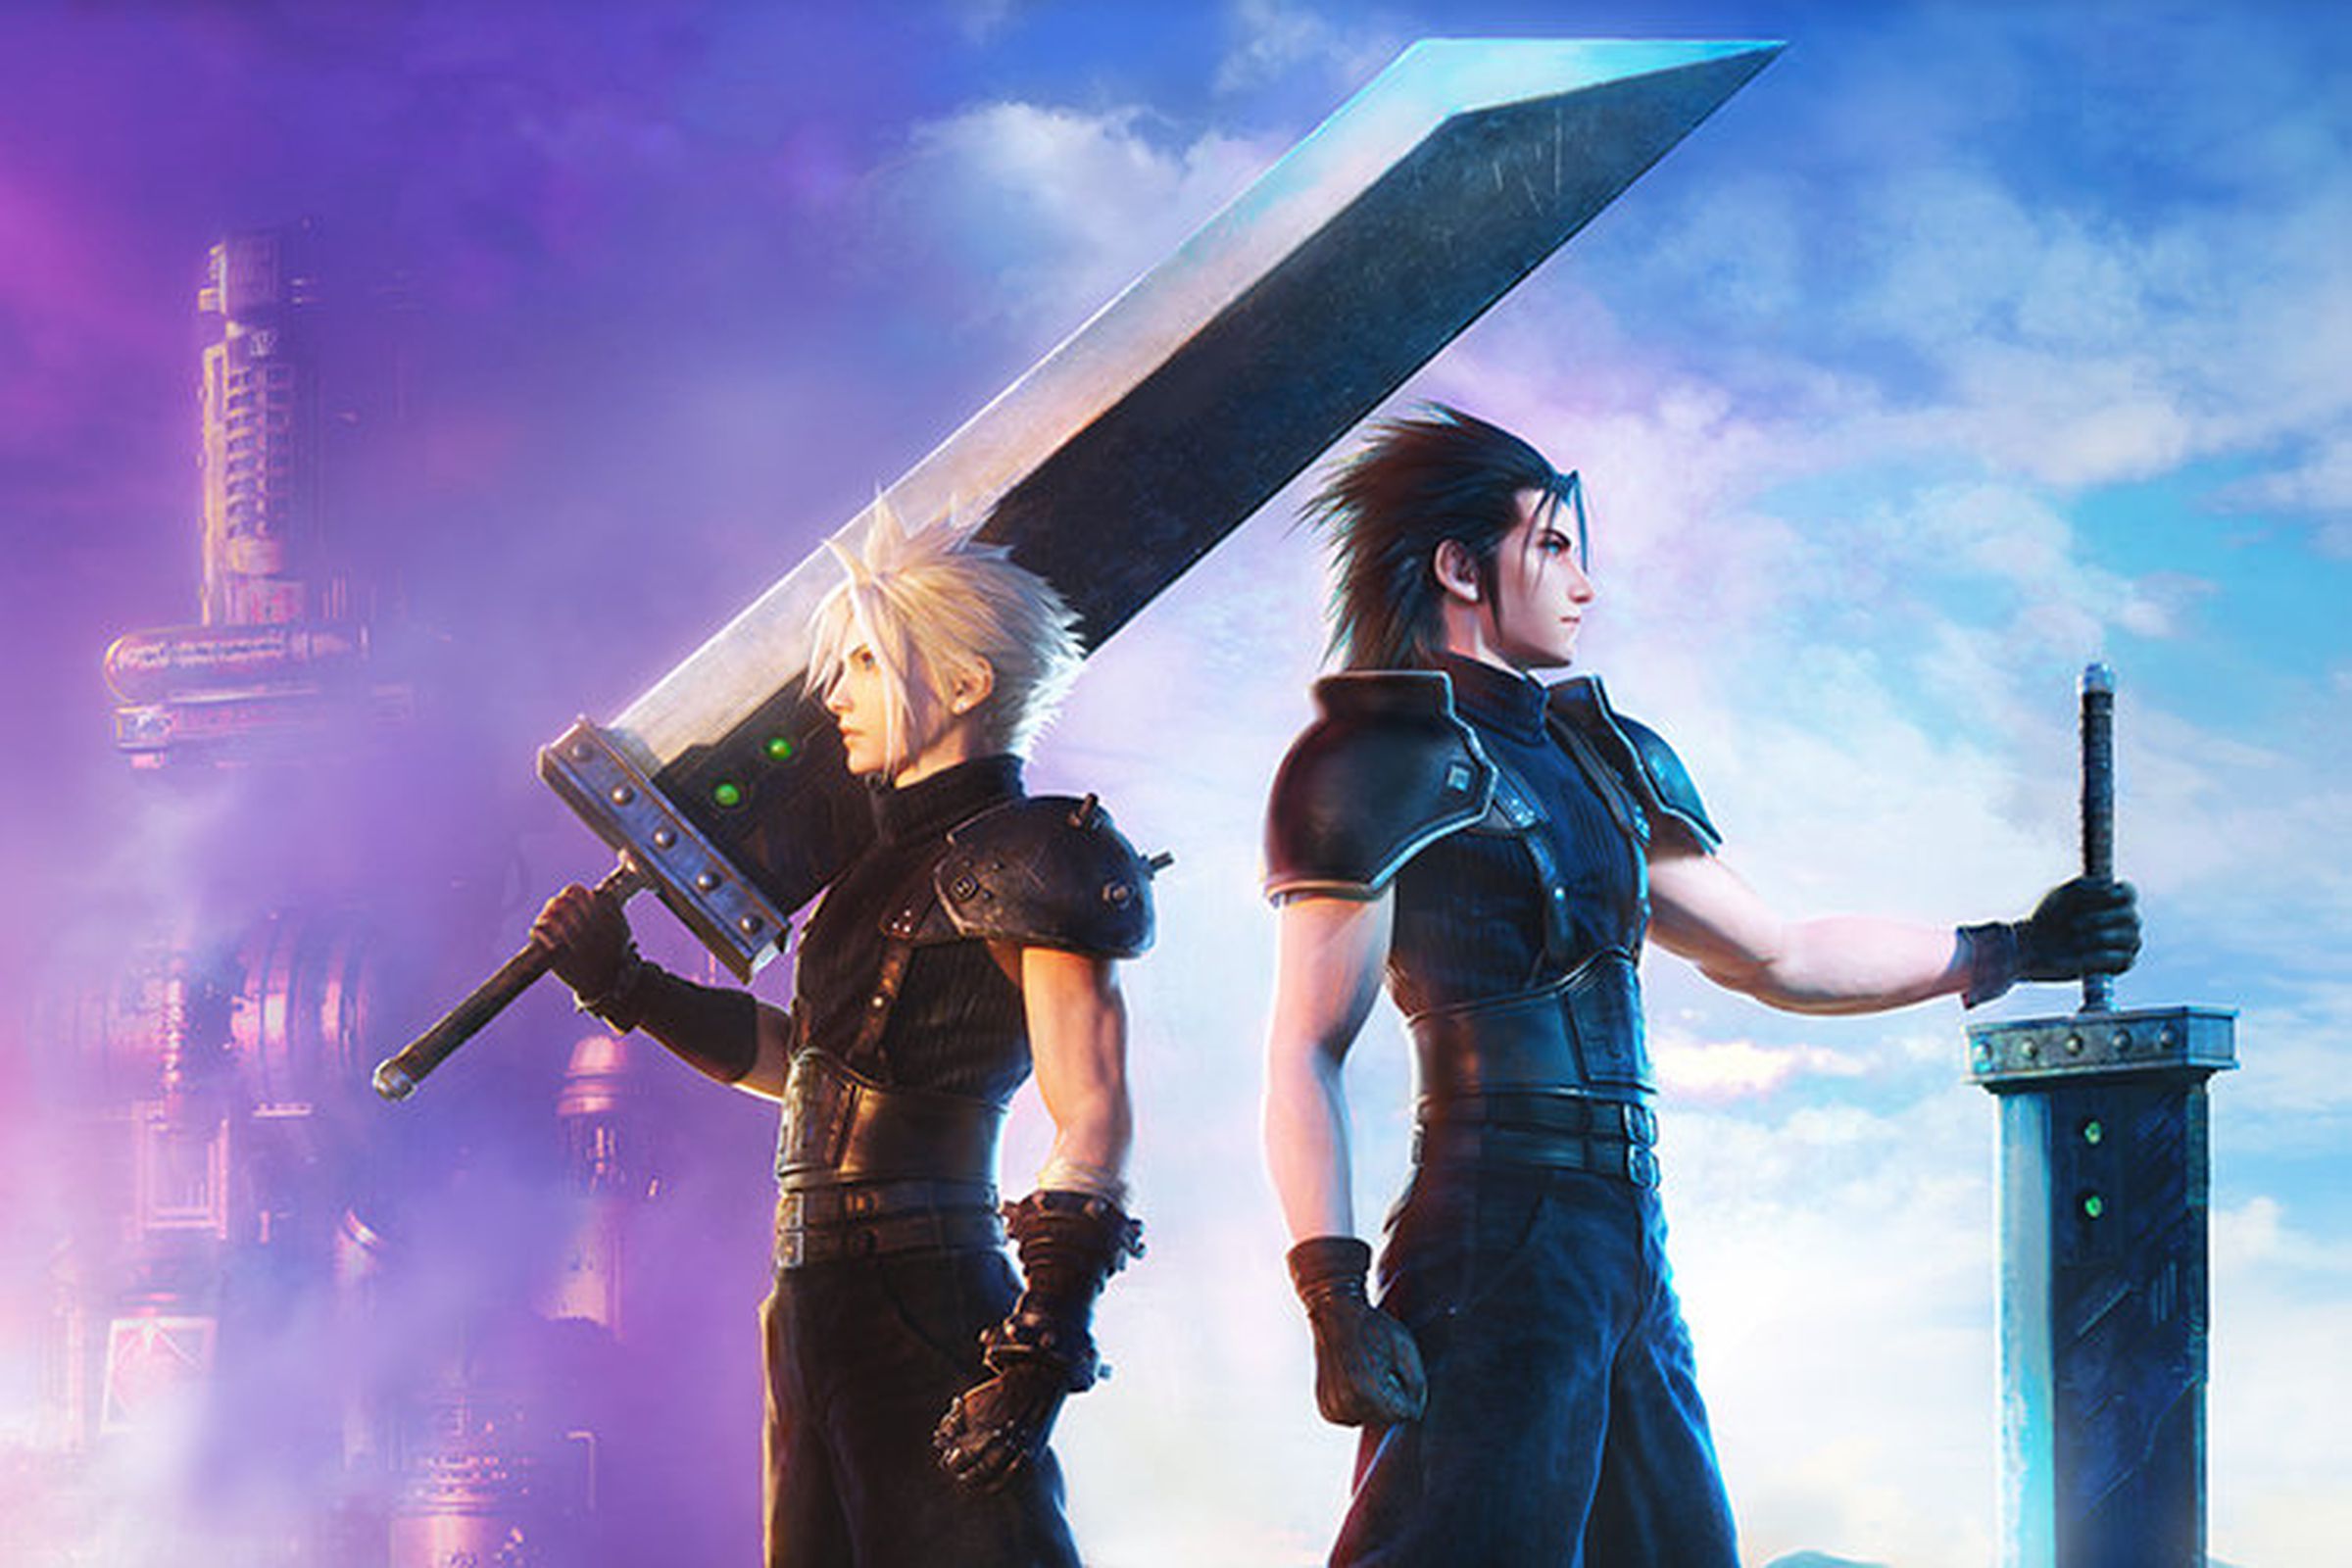 Final Fantasy VII Ever Crisis Is a Mobile Game - Siliconera